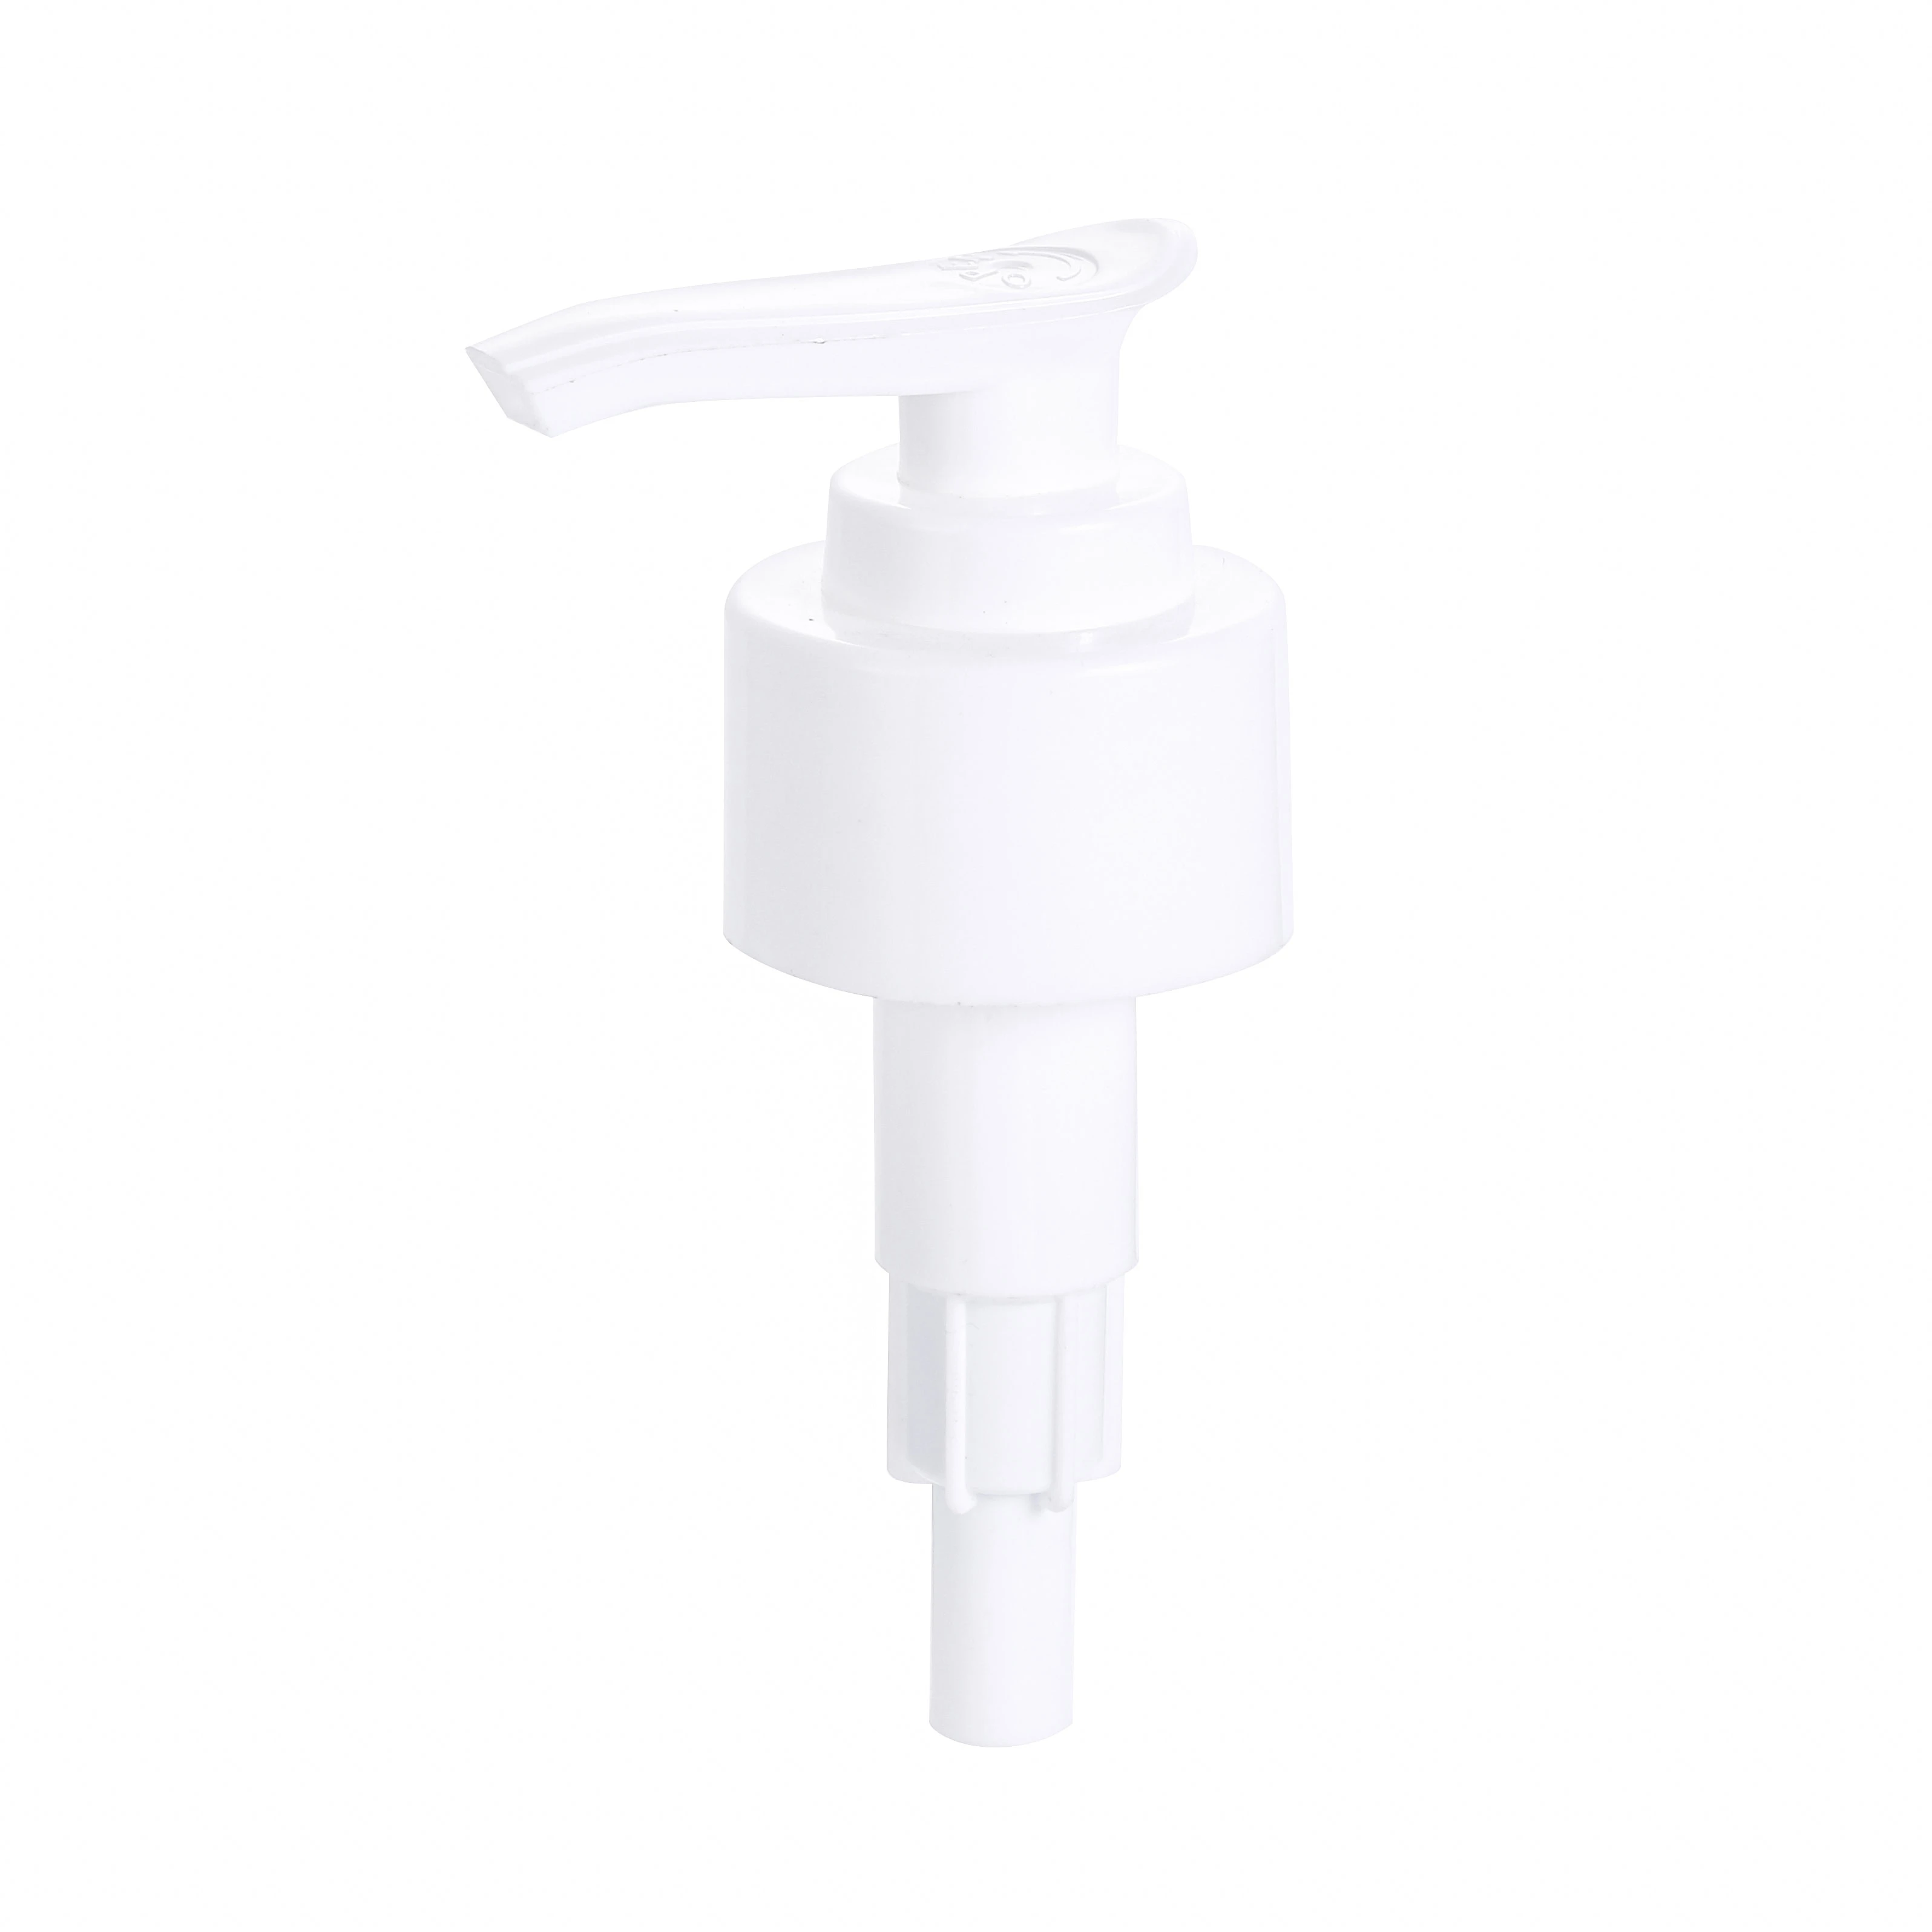 Guaranteed quality unique 24/410 lotion pump screw lotion dispenser pump